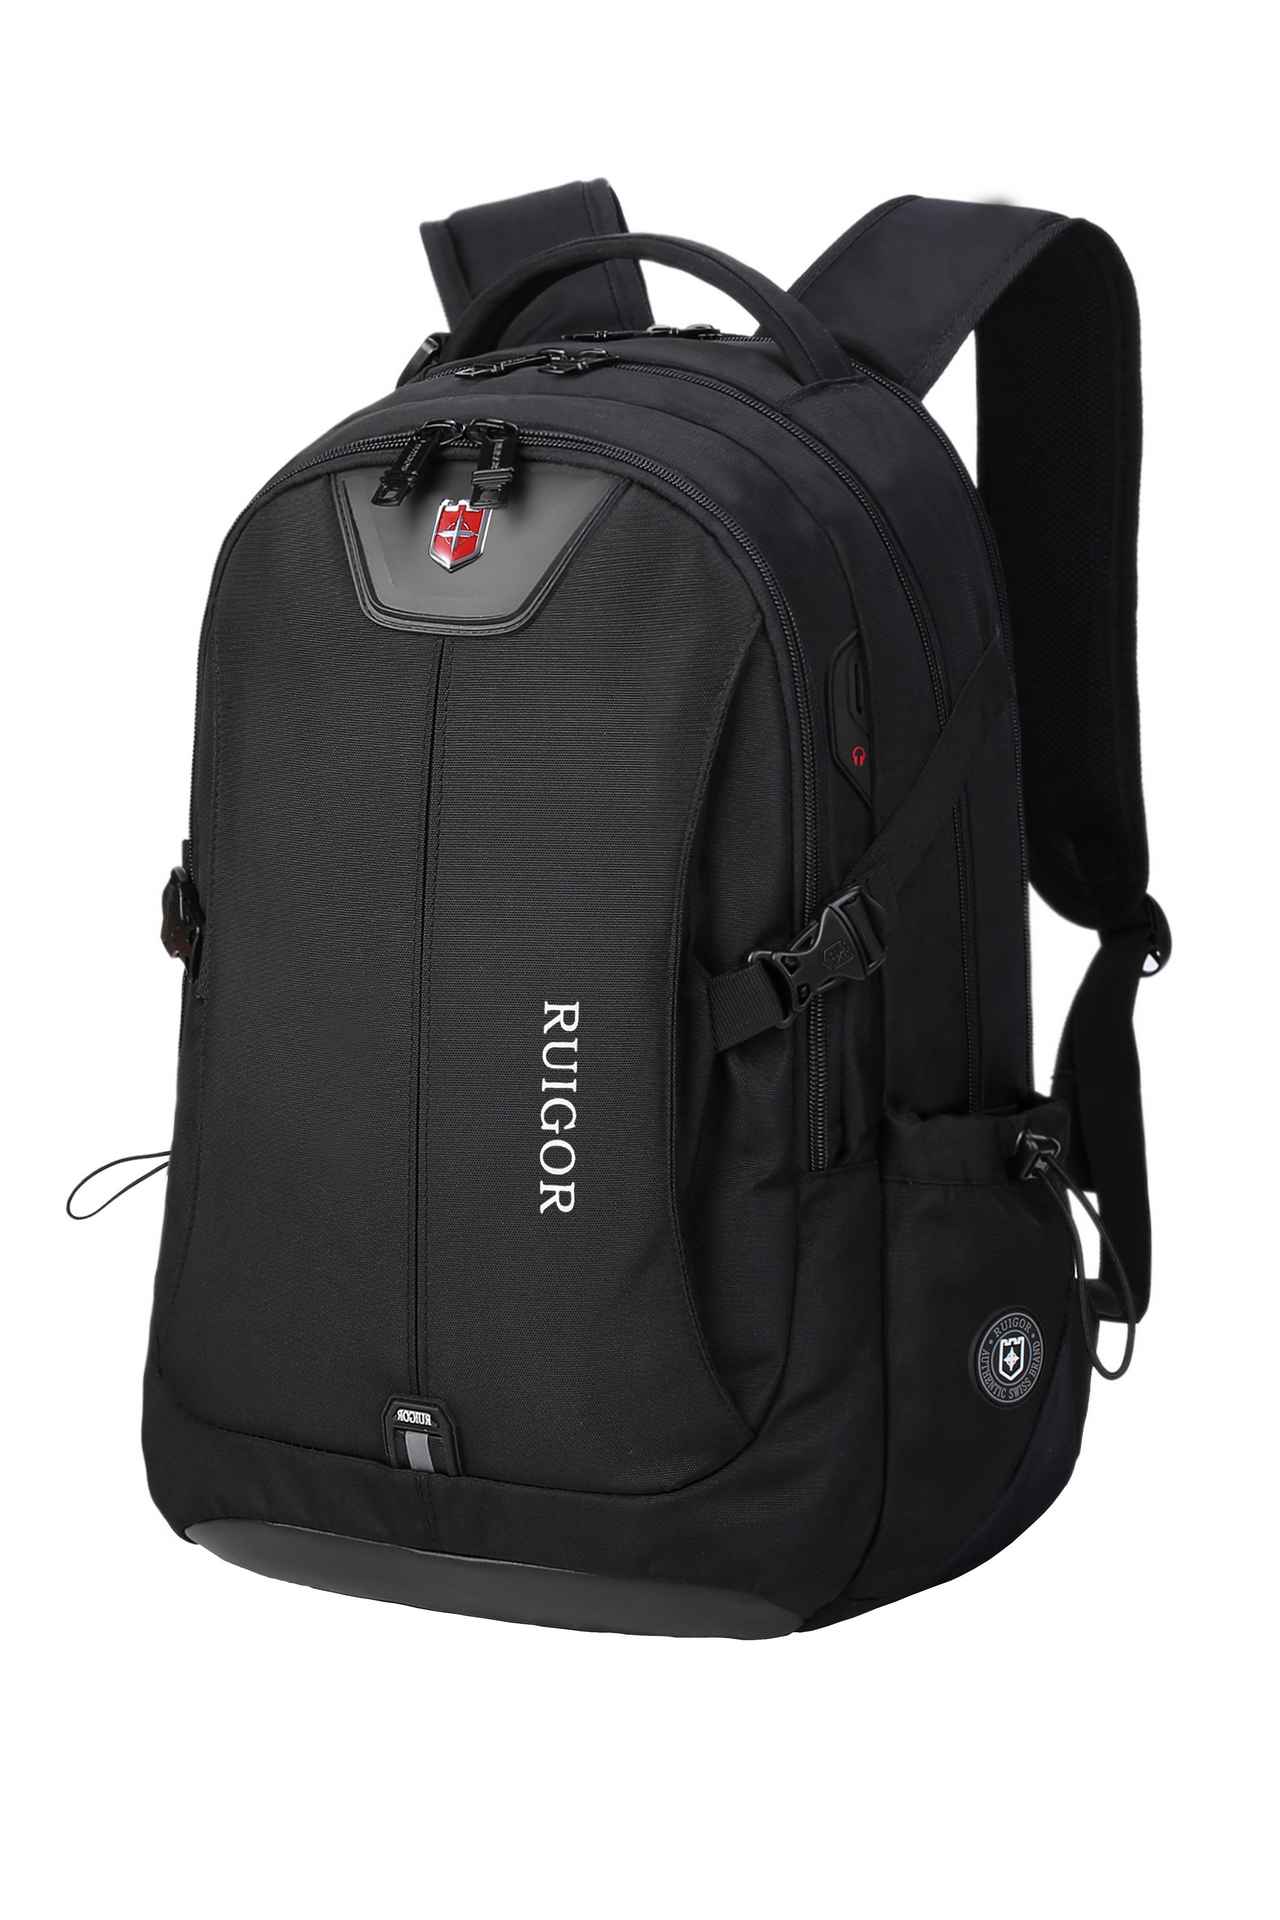 RUIGOR ICON  47 Laptop Backpack Black